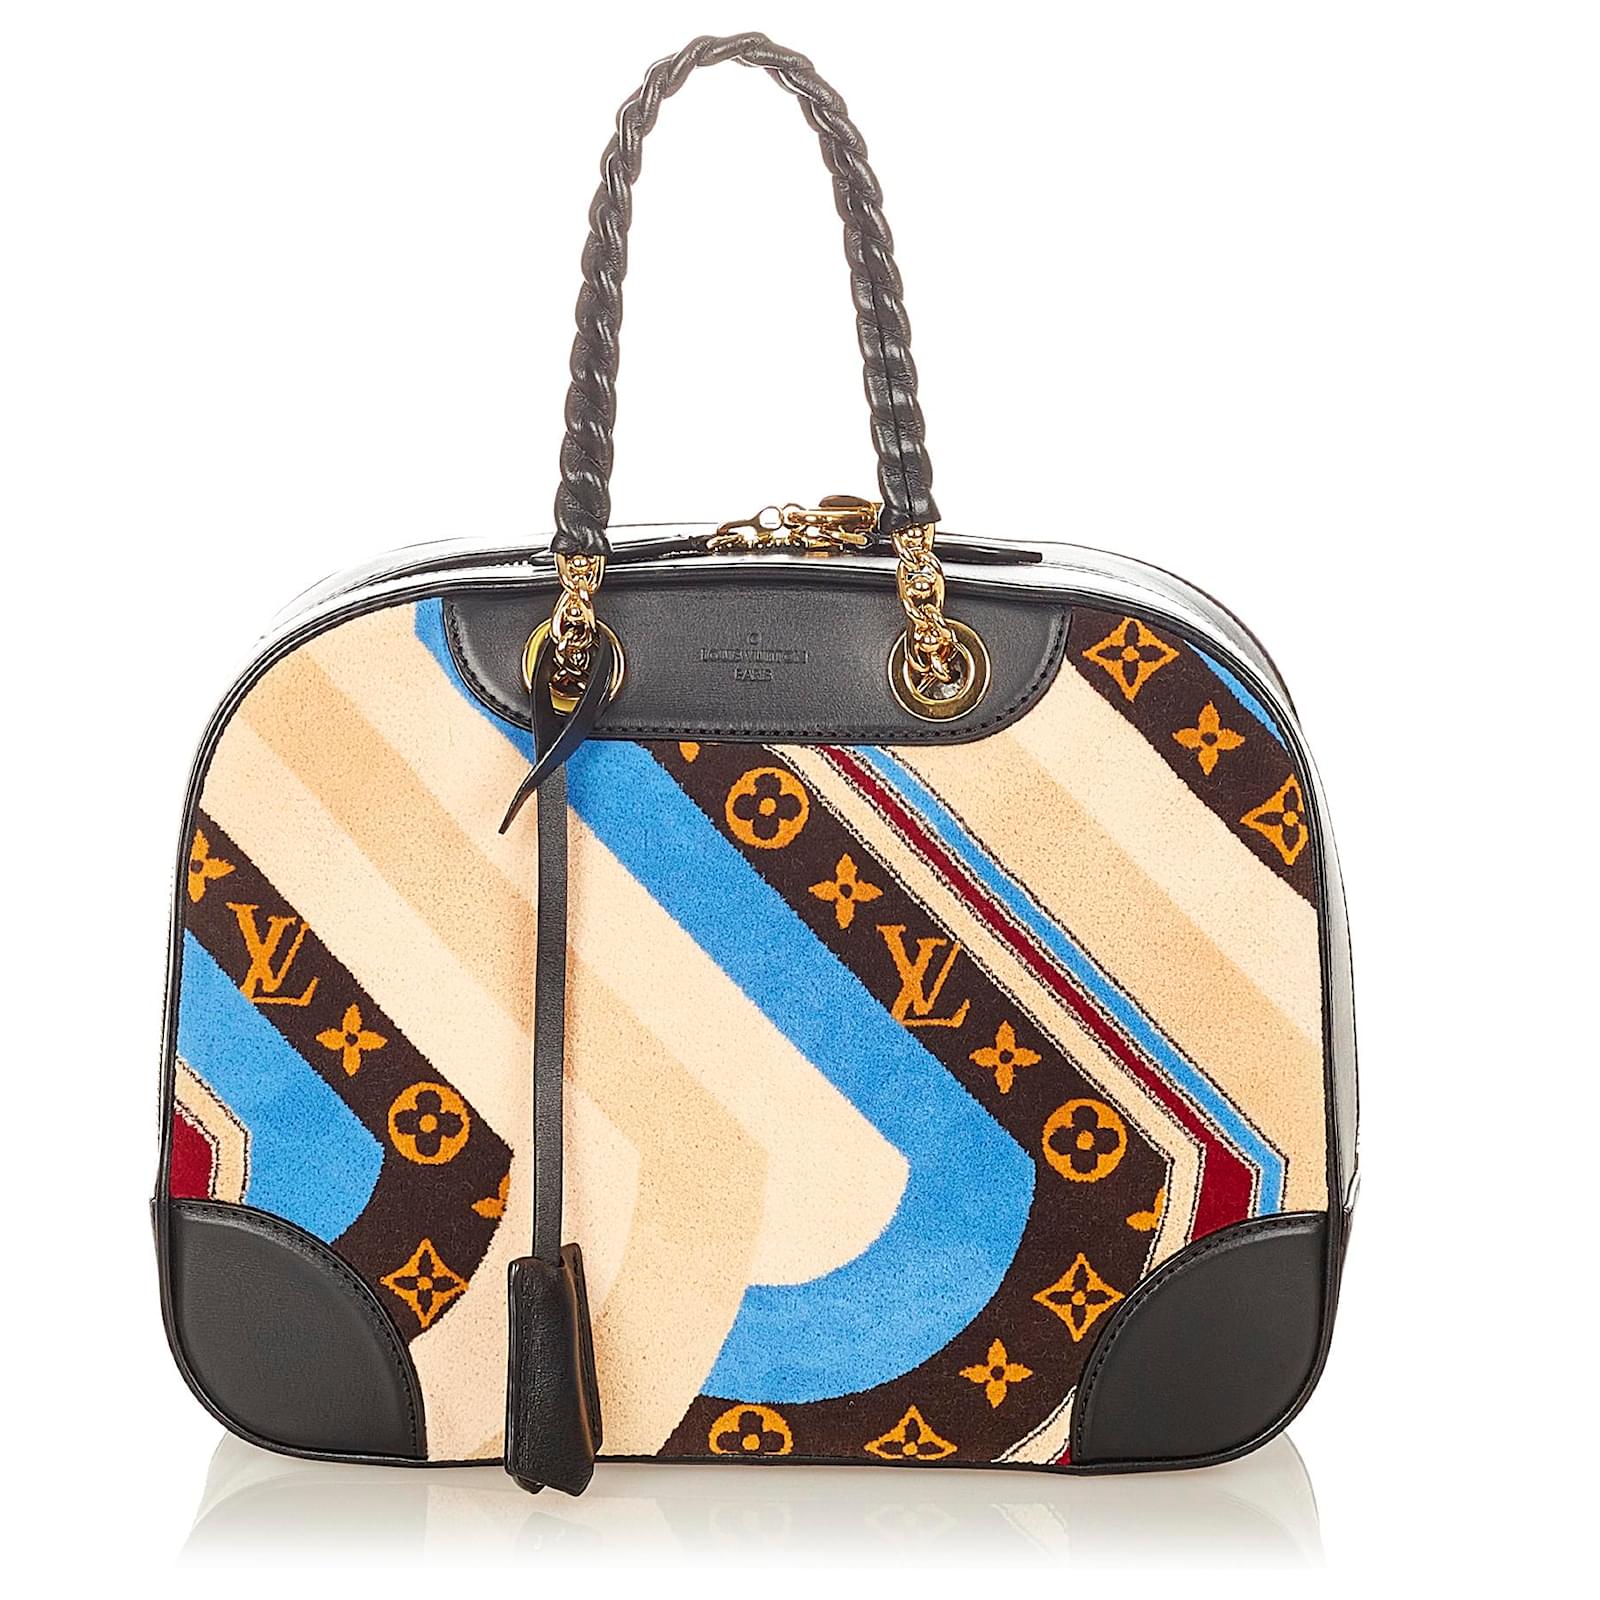 Louis Vuitton Bowling Bag Style Handbag